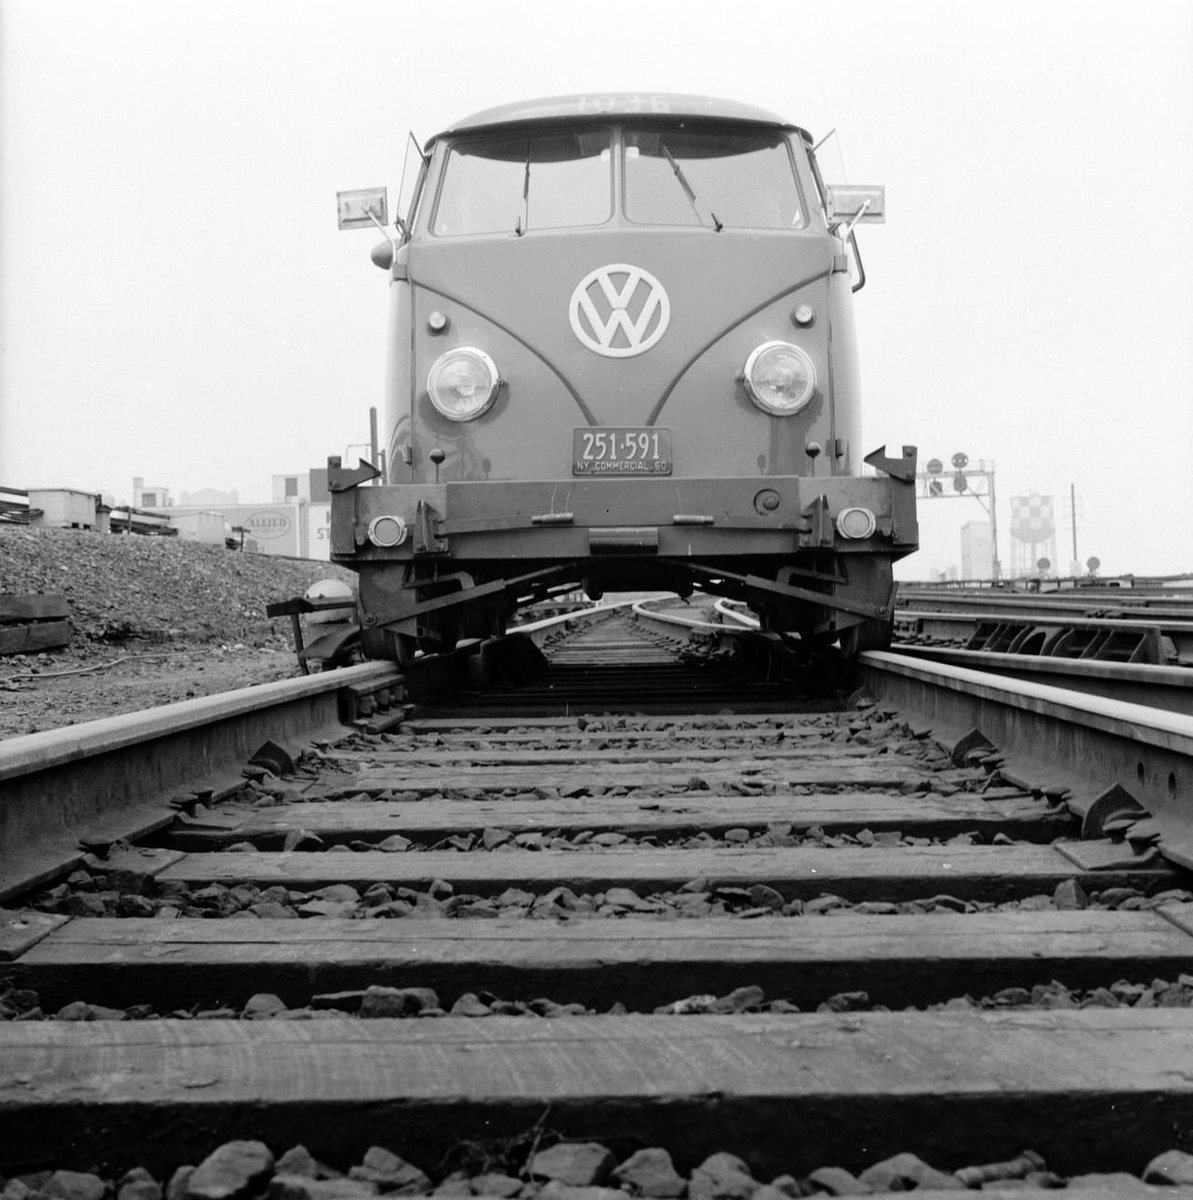 #vw #Volkswagen #train #somethingdifferent #SaturdayMorning #weekend